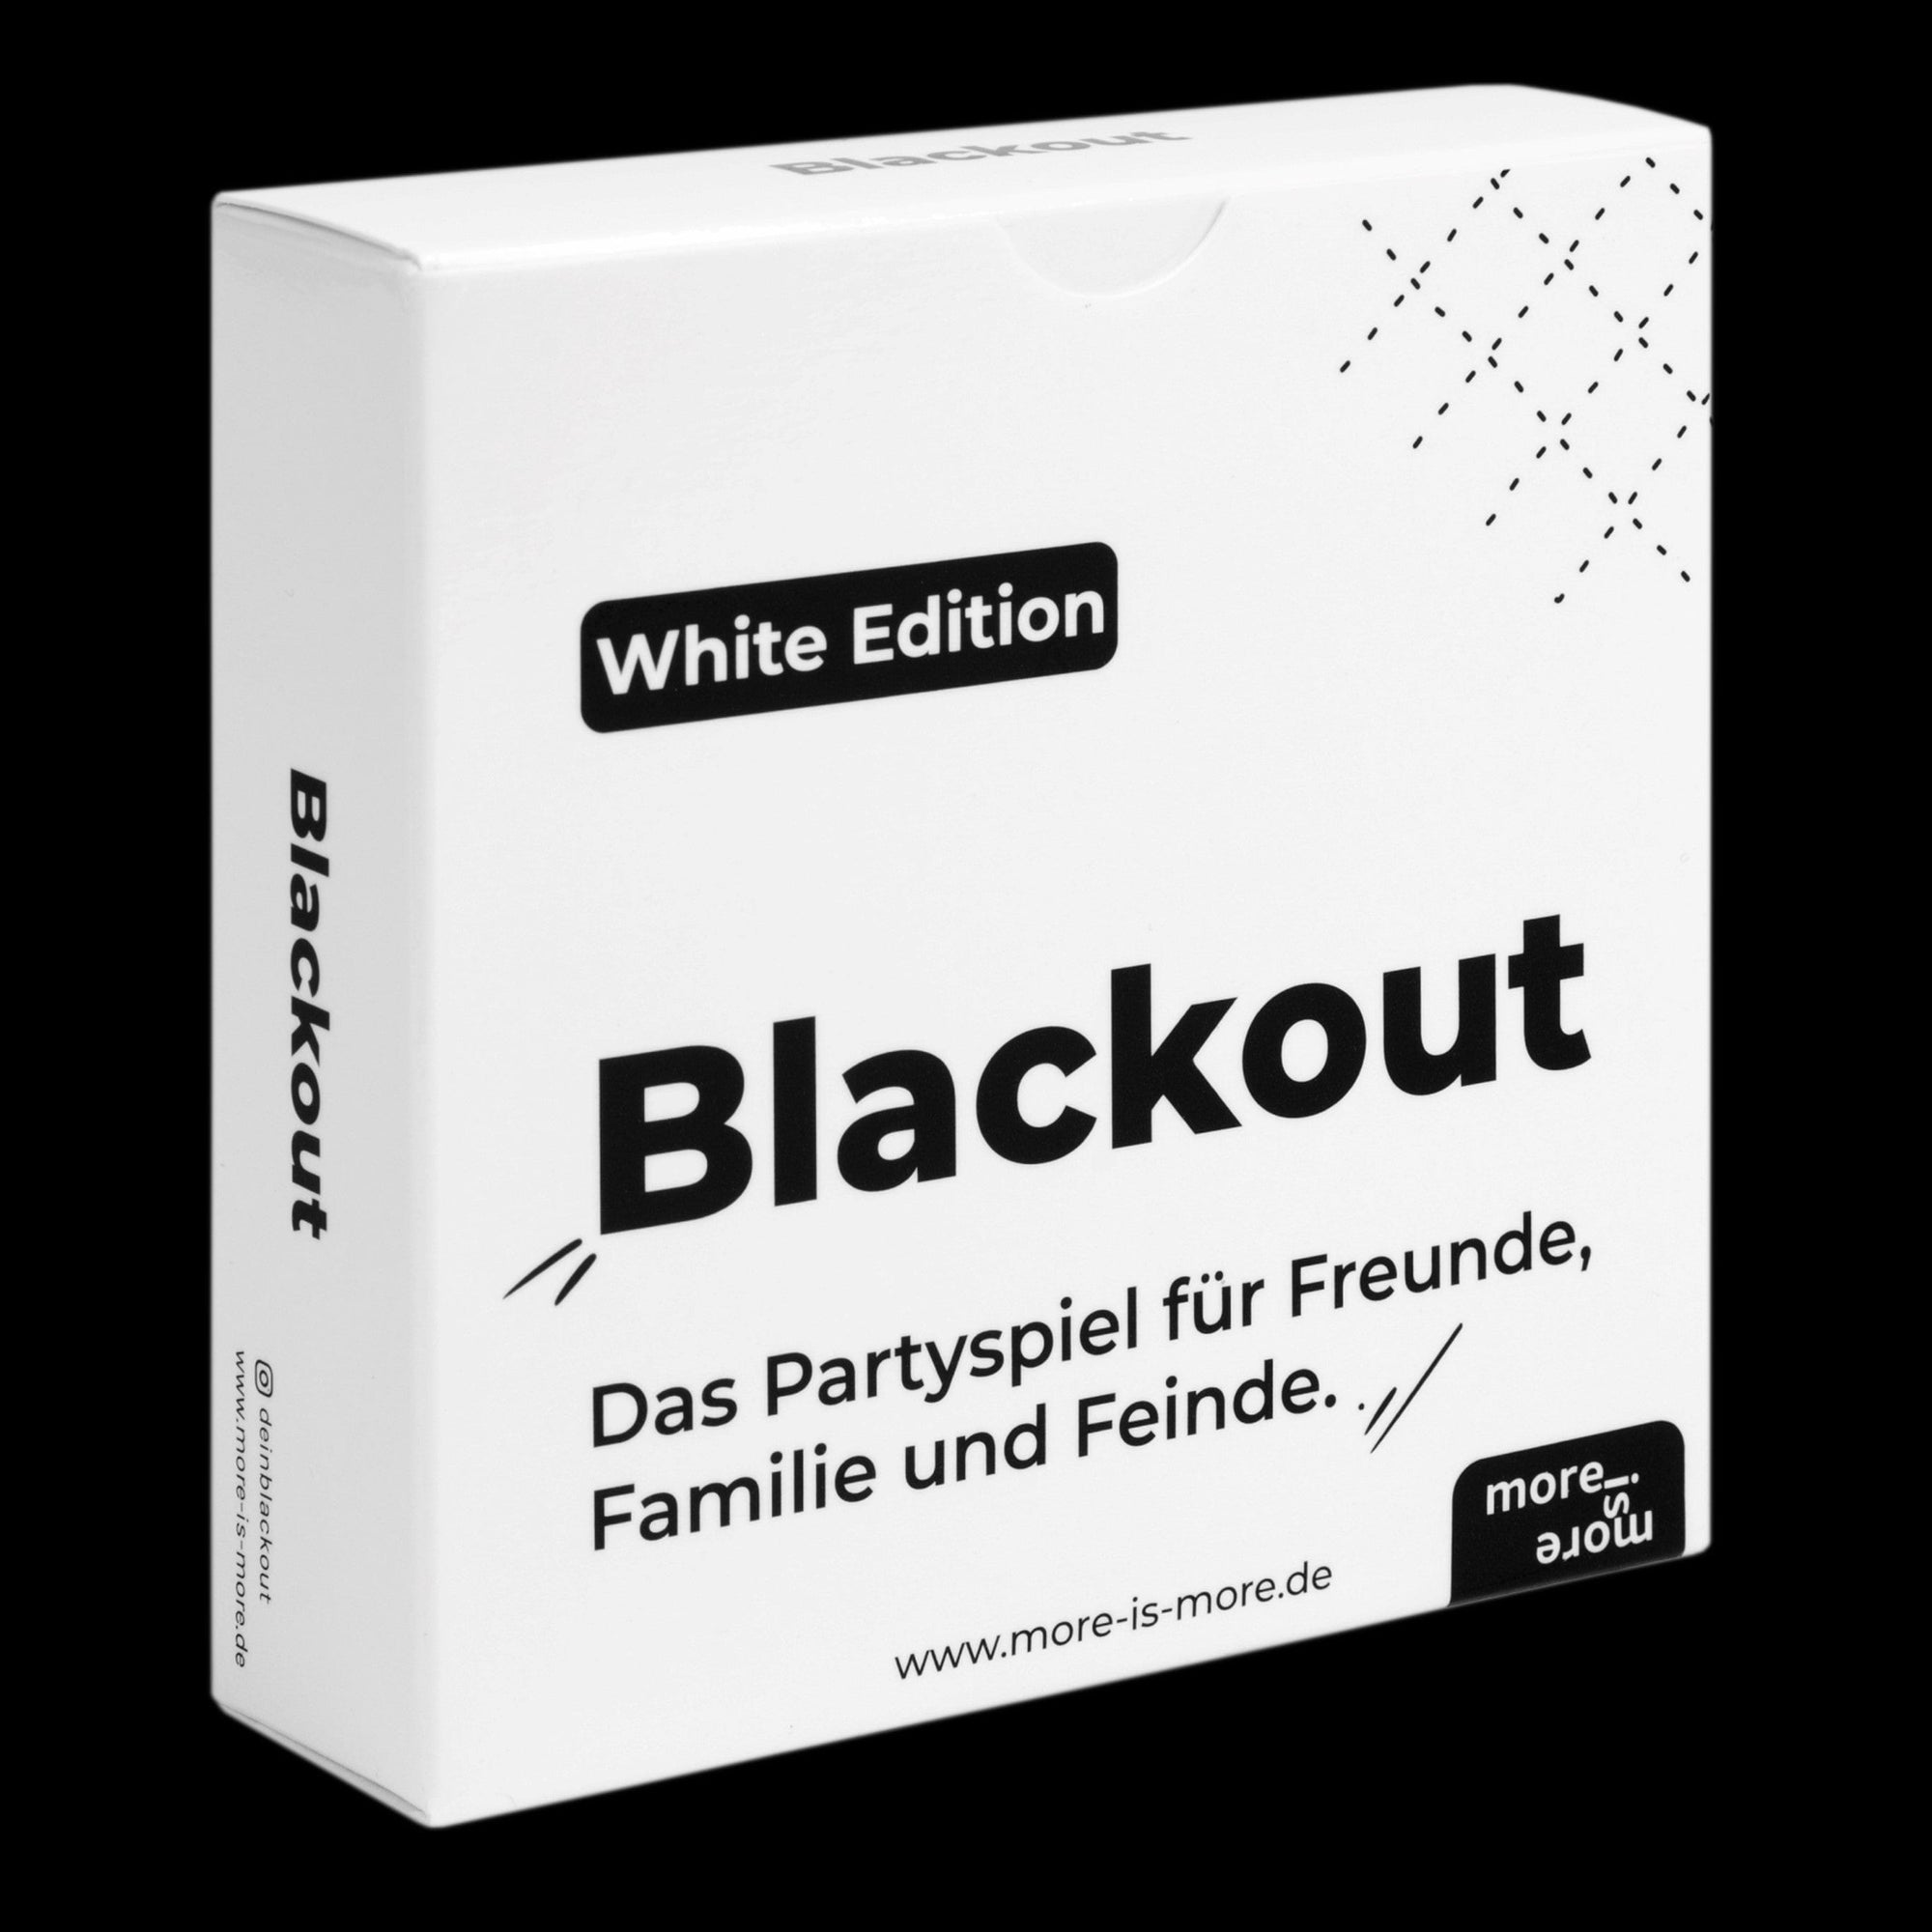 White Edition des Blackout Kartenspiels